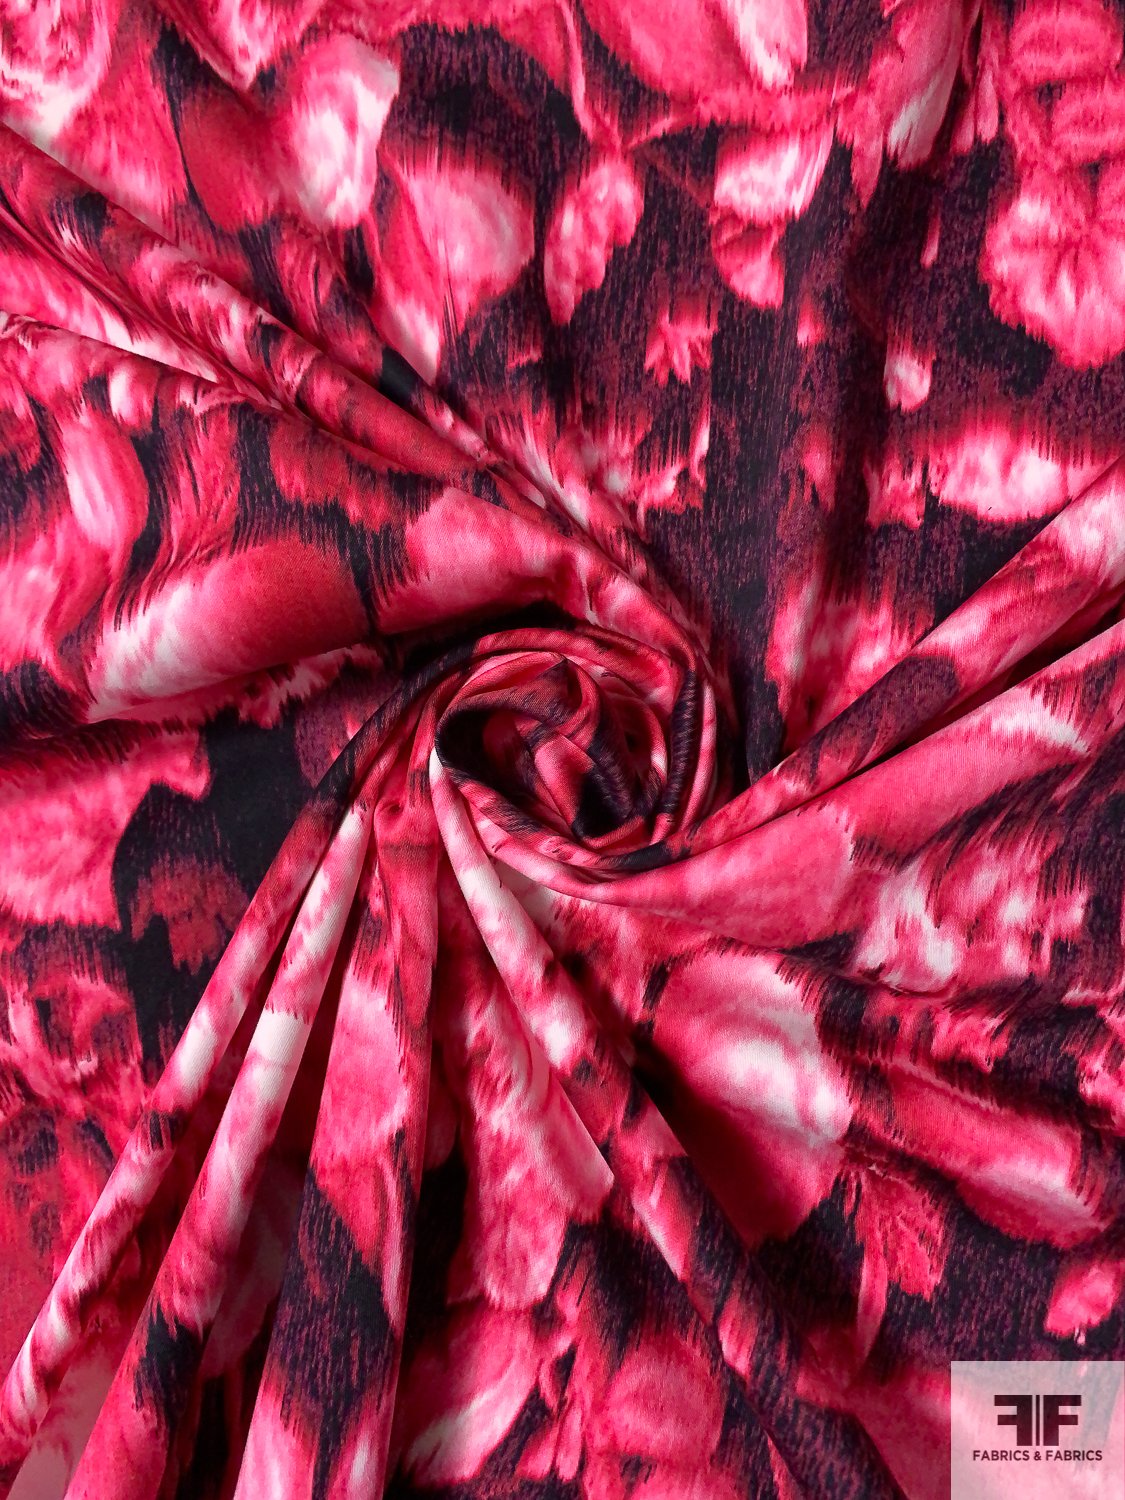 Hazy Floral Printed Stretch Cotton Sateen - Deep Magenta / Berry Pink / Black